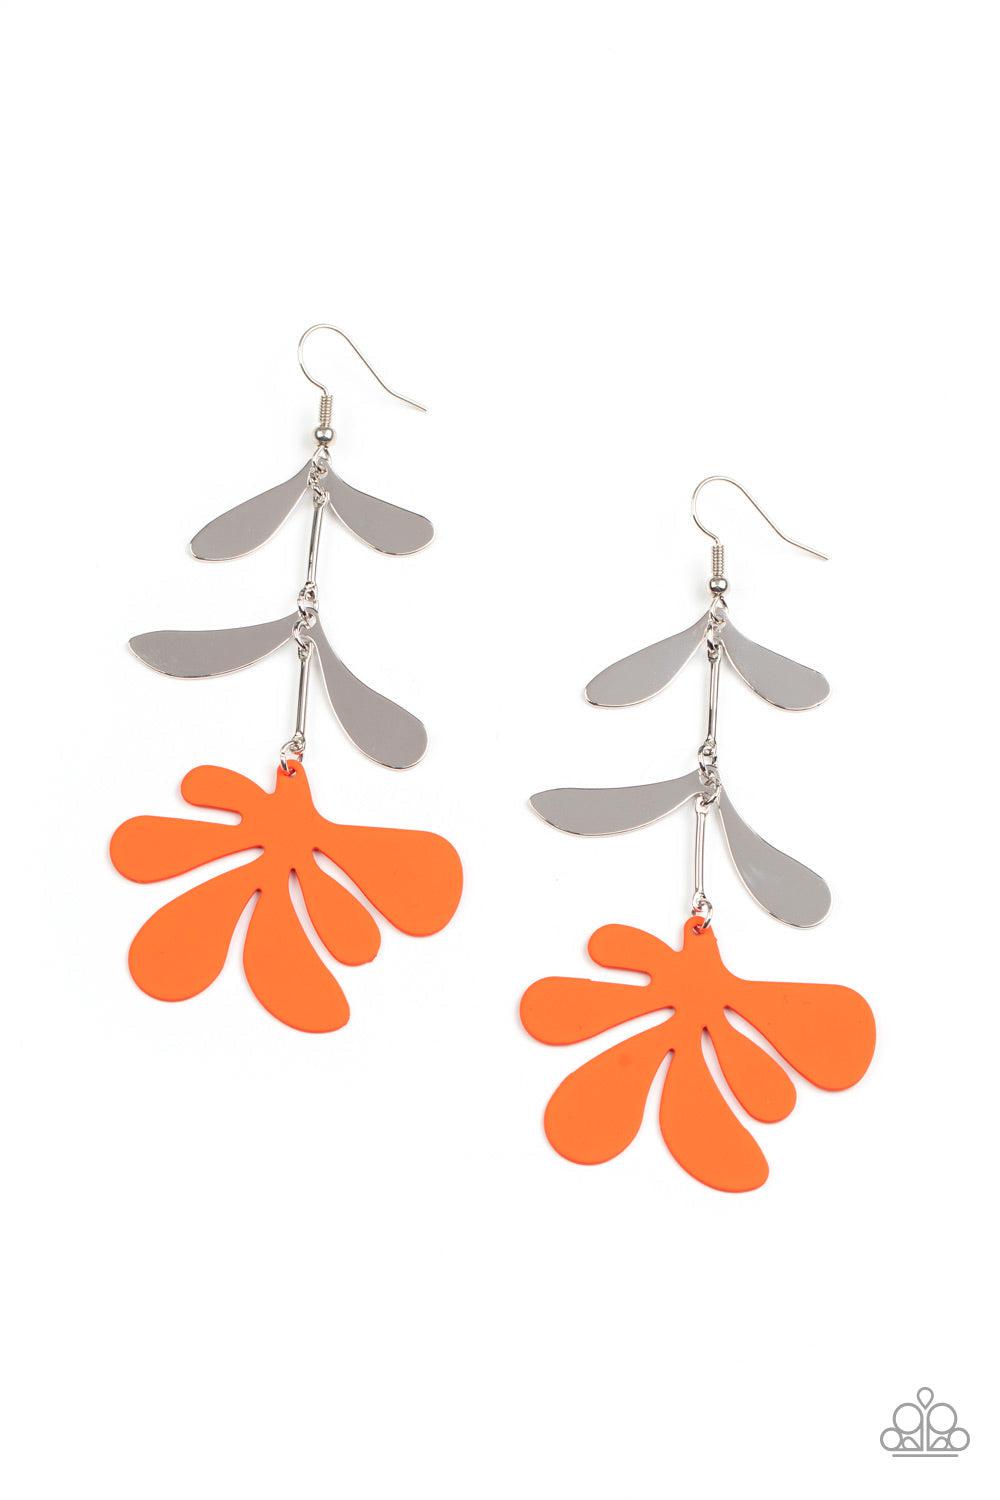 Palm Beach Bonanza Orange Earrings - Paparazzi Accessories- lightbox - CarasShop.com - $5 Jewelry by Cara Jewels